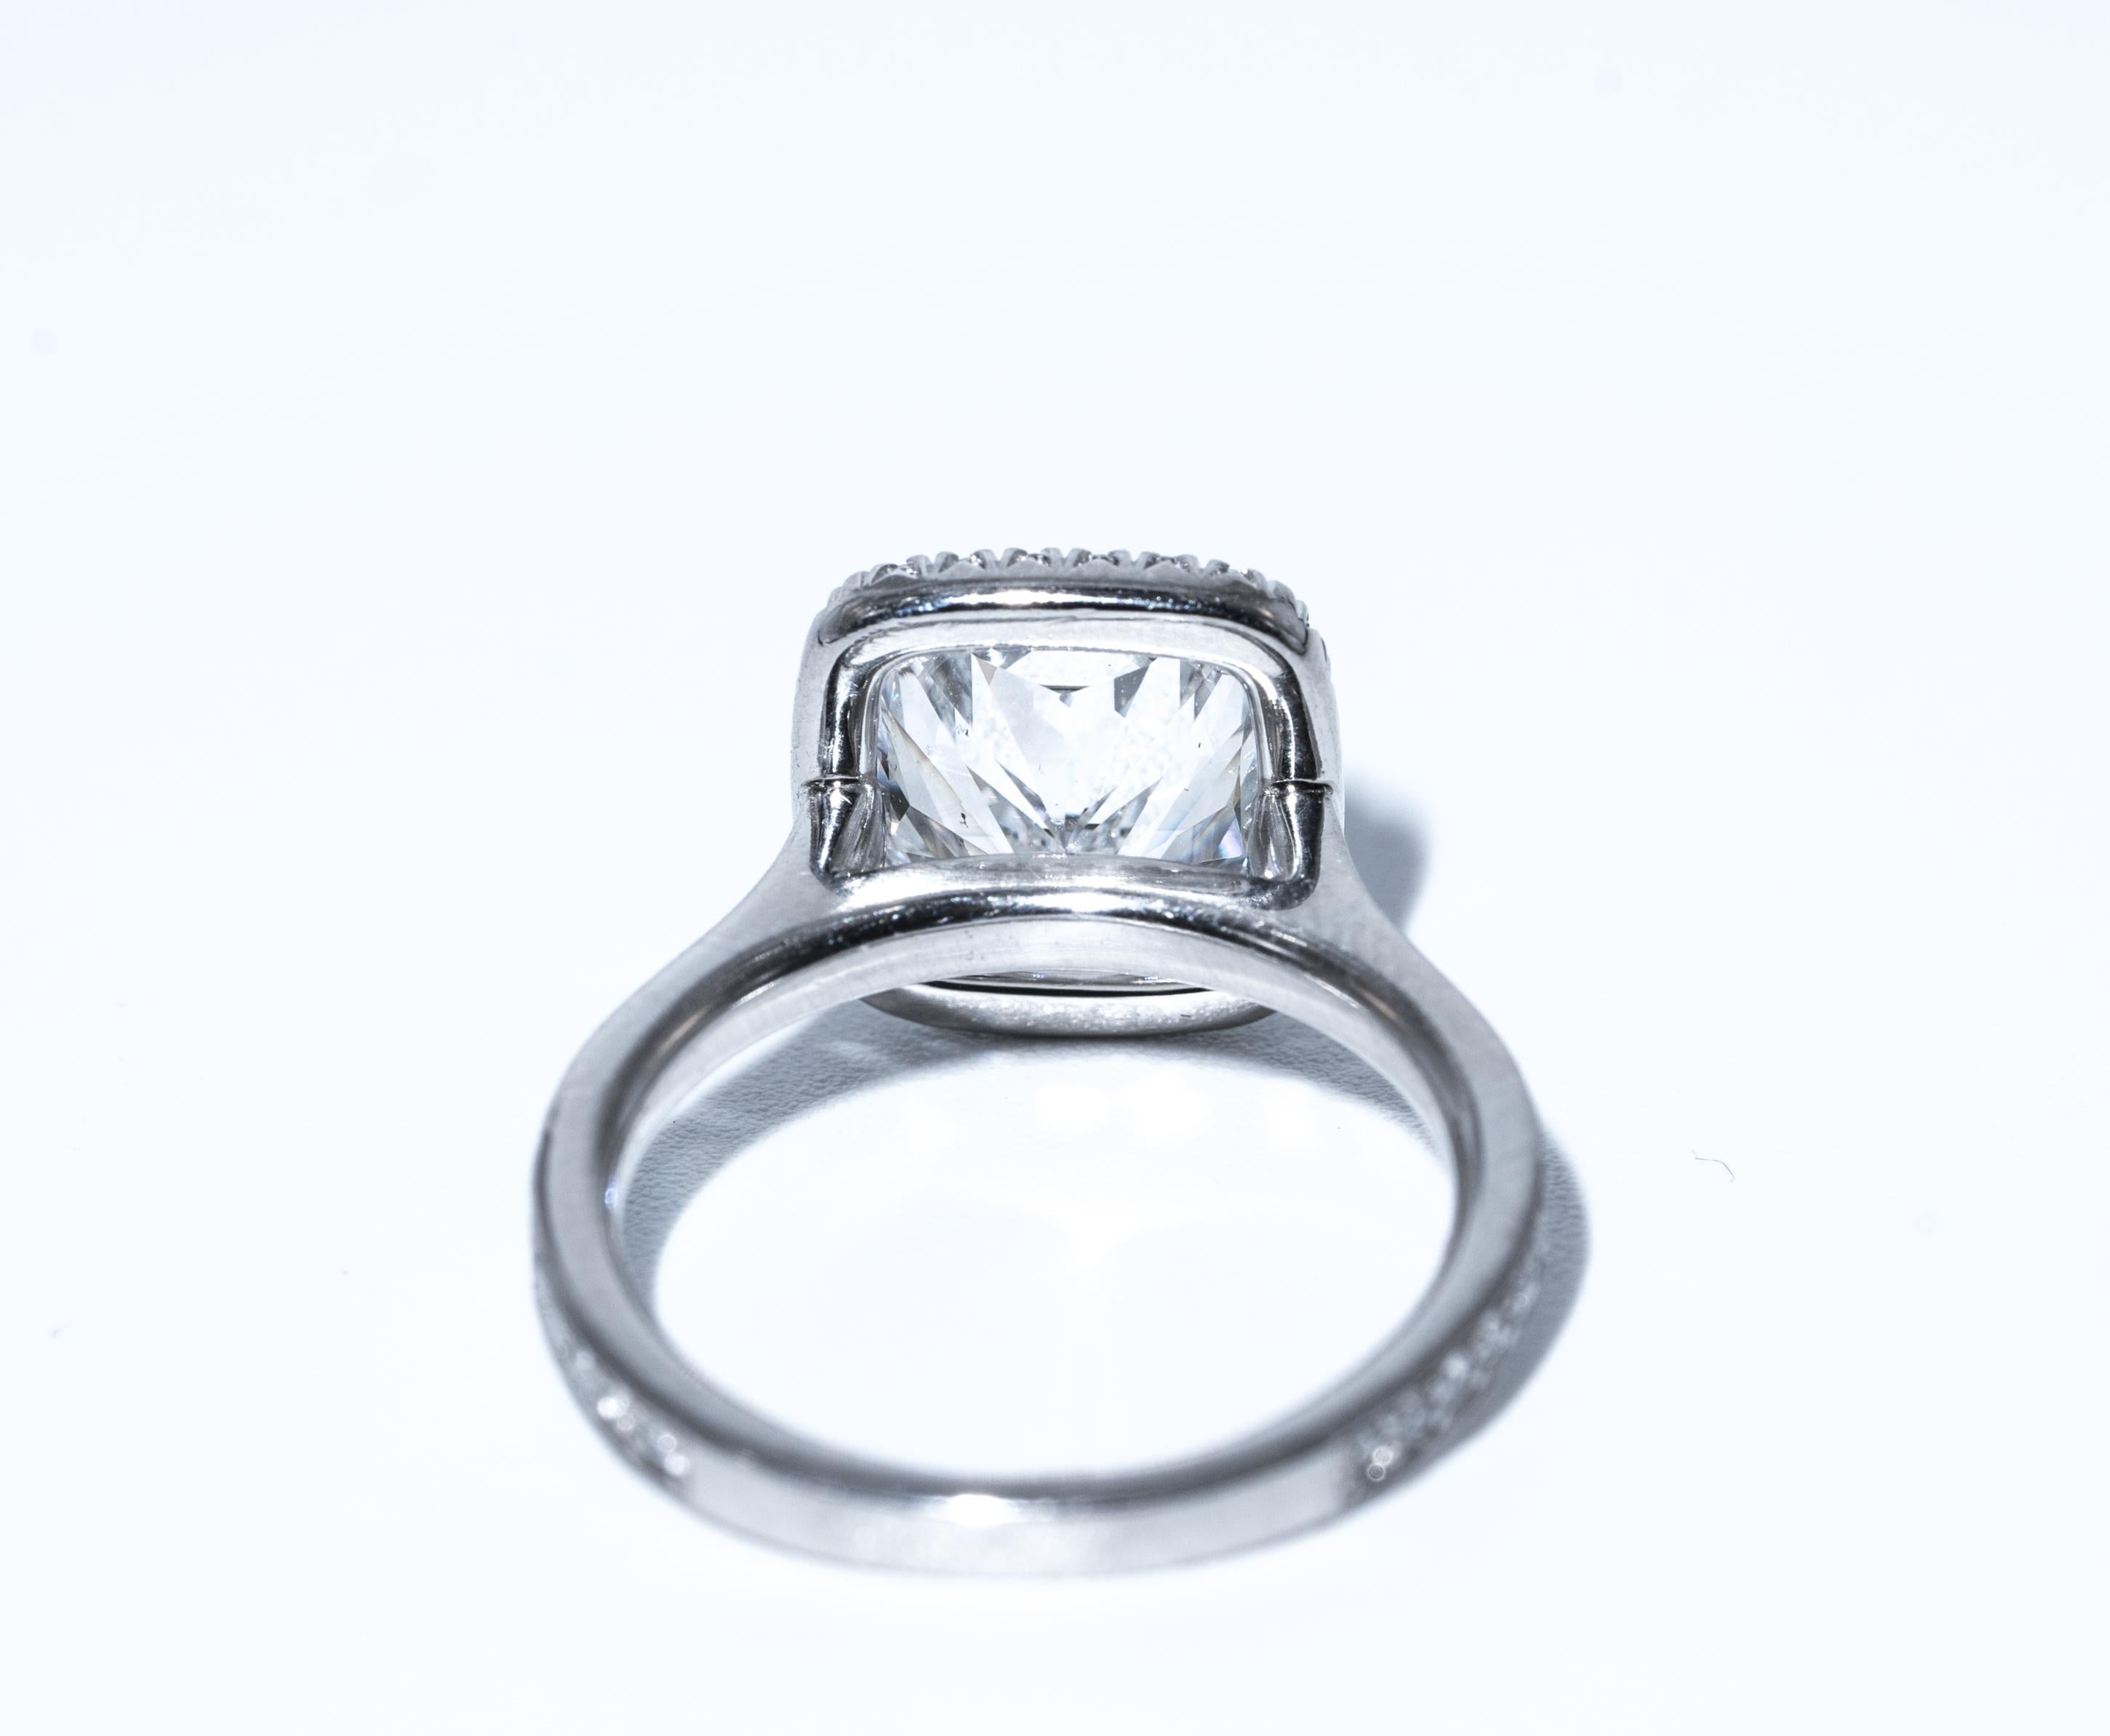 3 carat cushion cut halo engagement rings